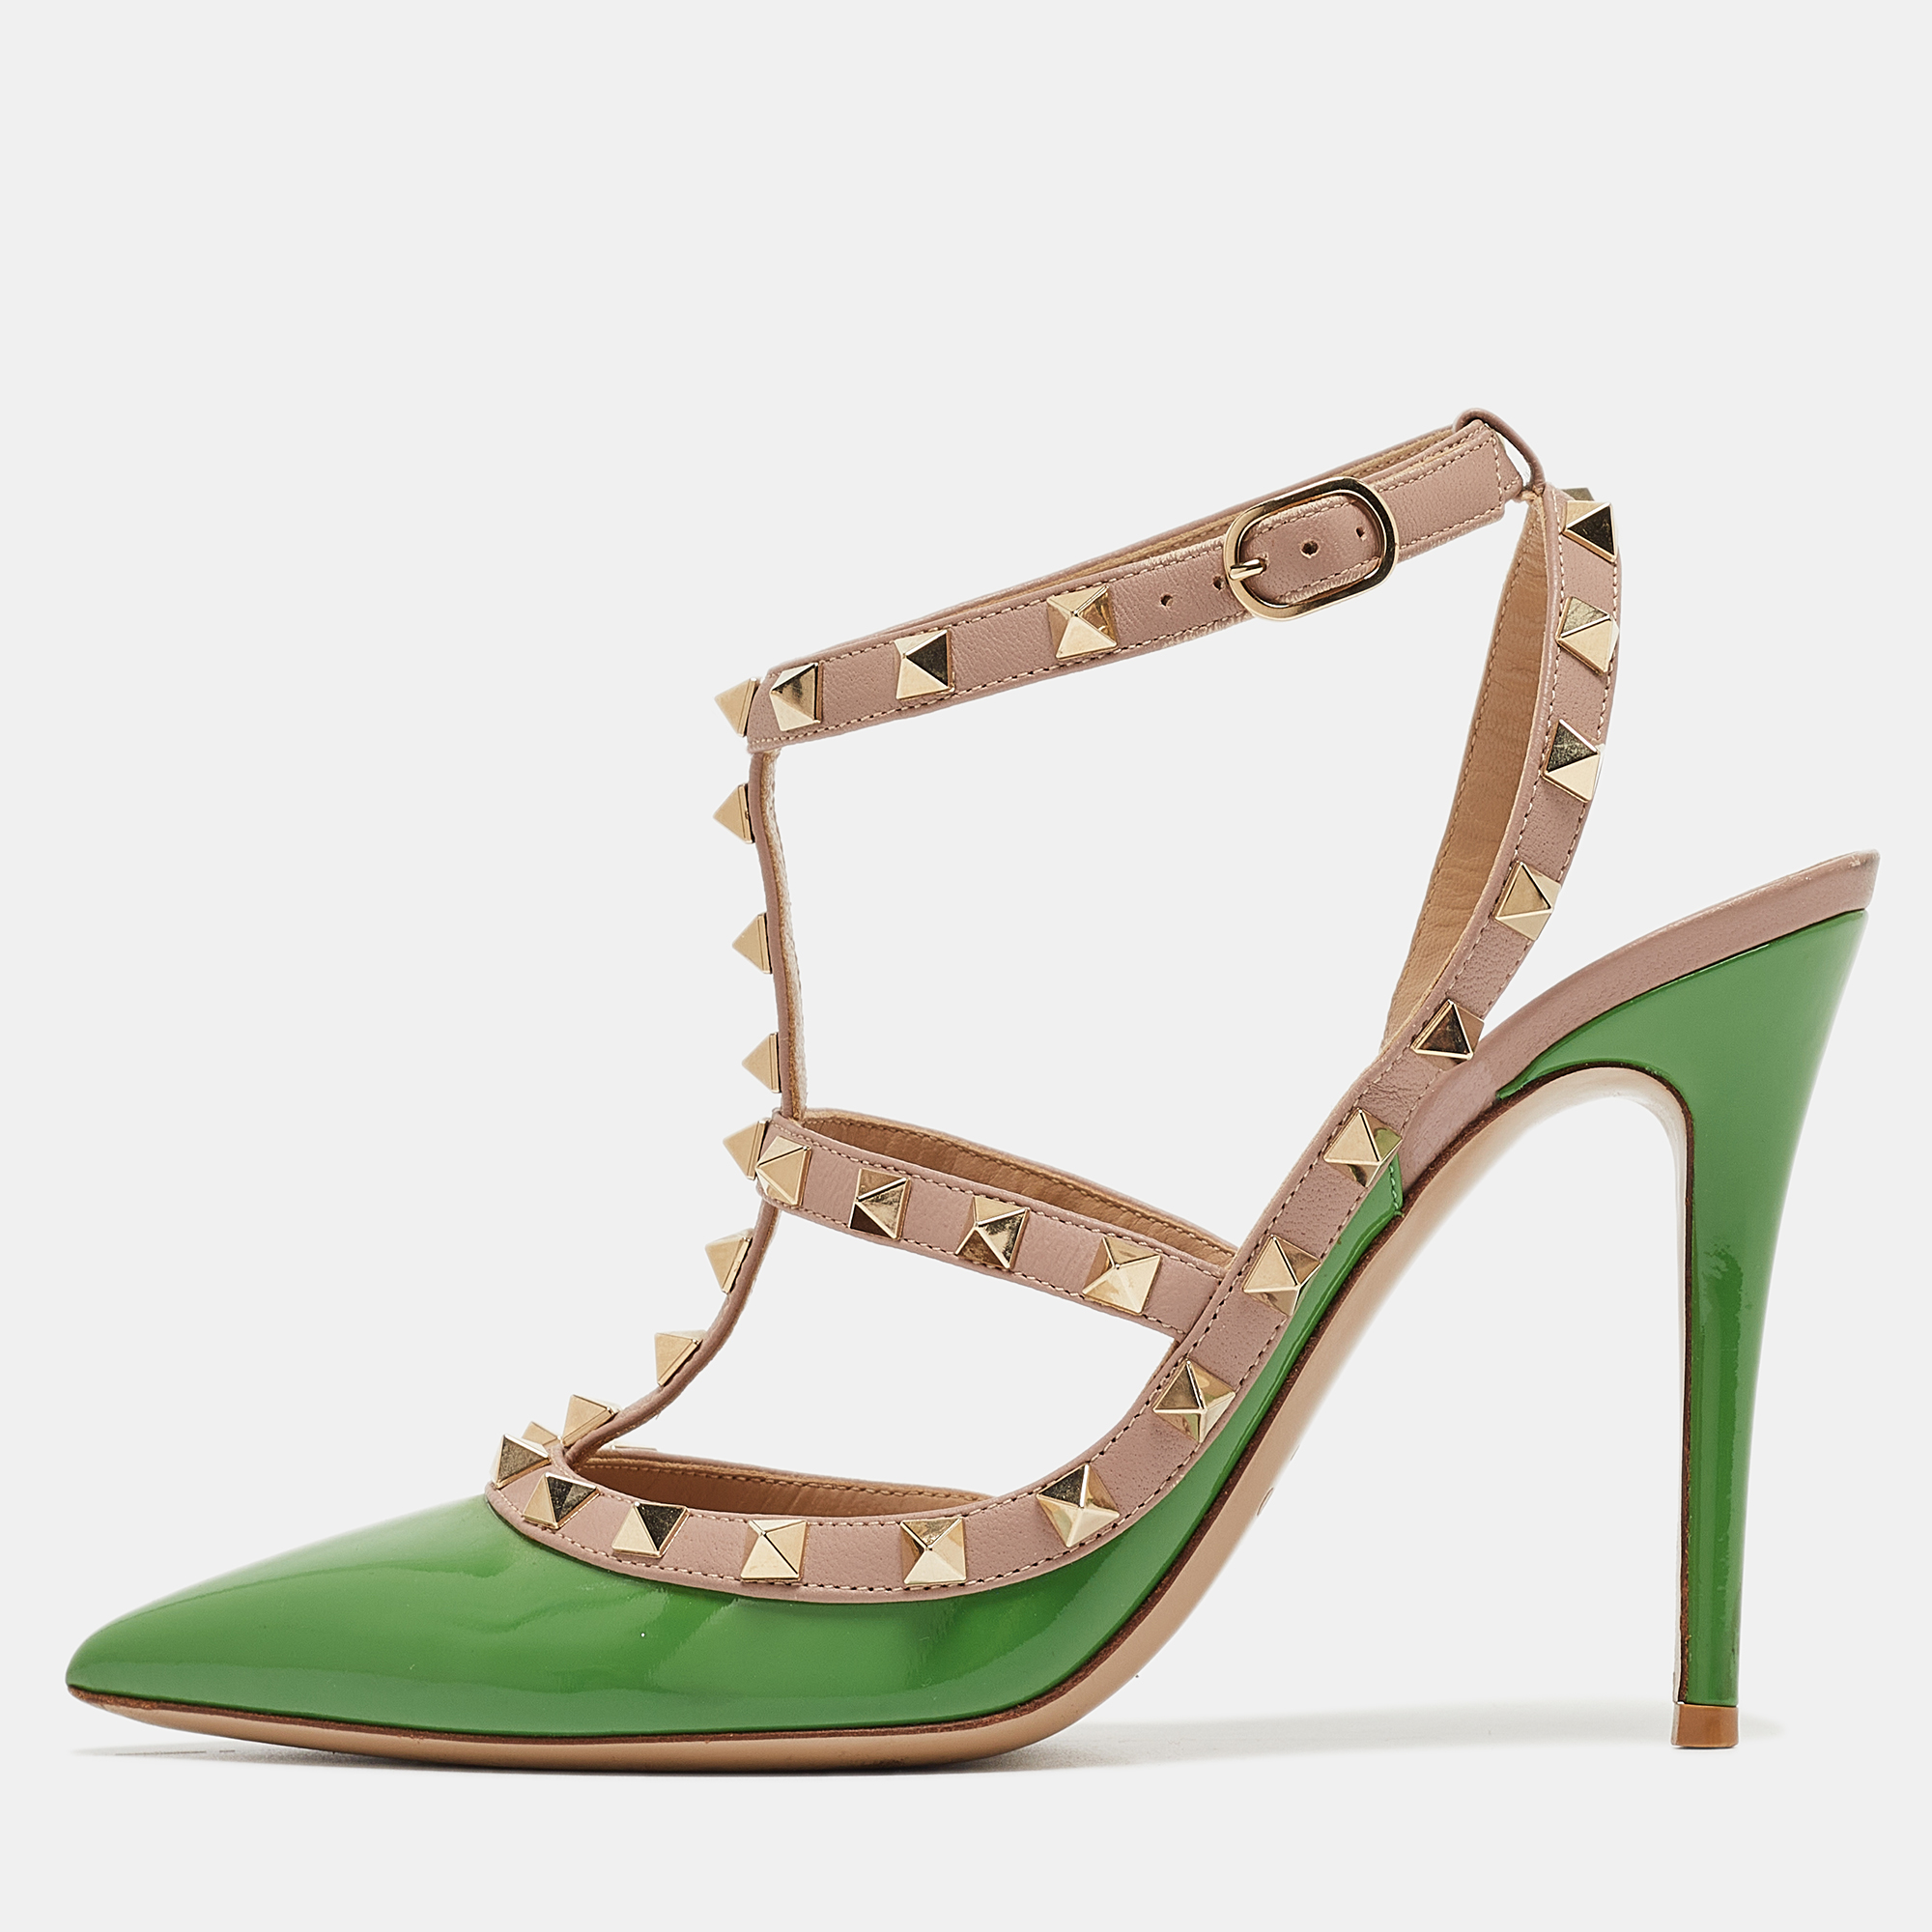 Pre-owned Valentino Garavani Green Patent Leather Rockstud Ankle Strap Pumps Size 39